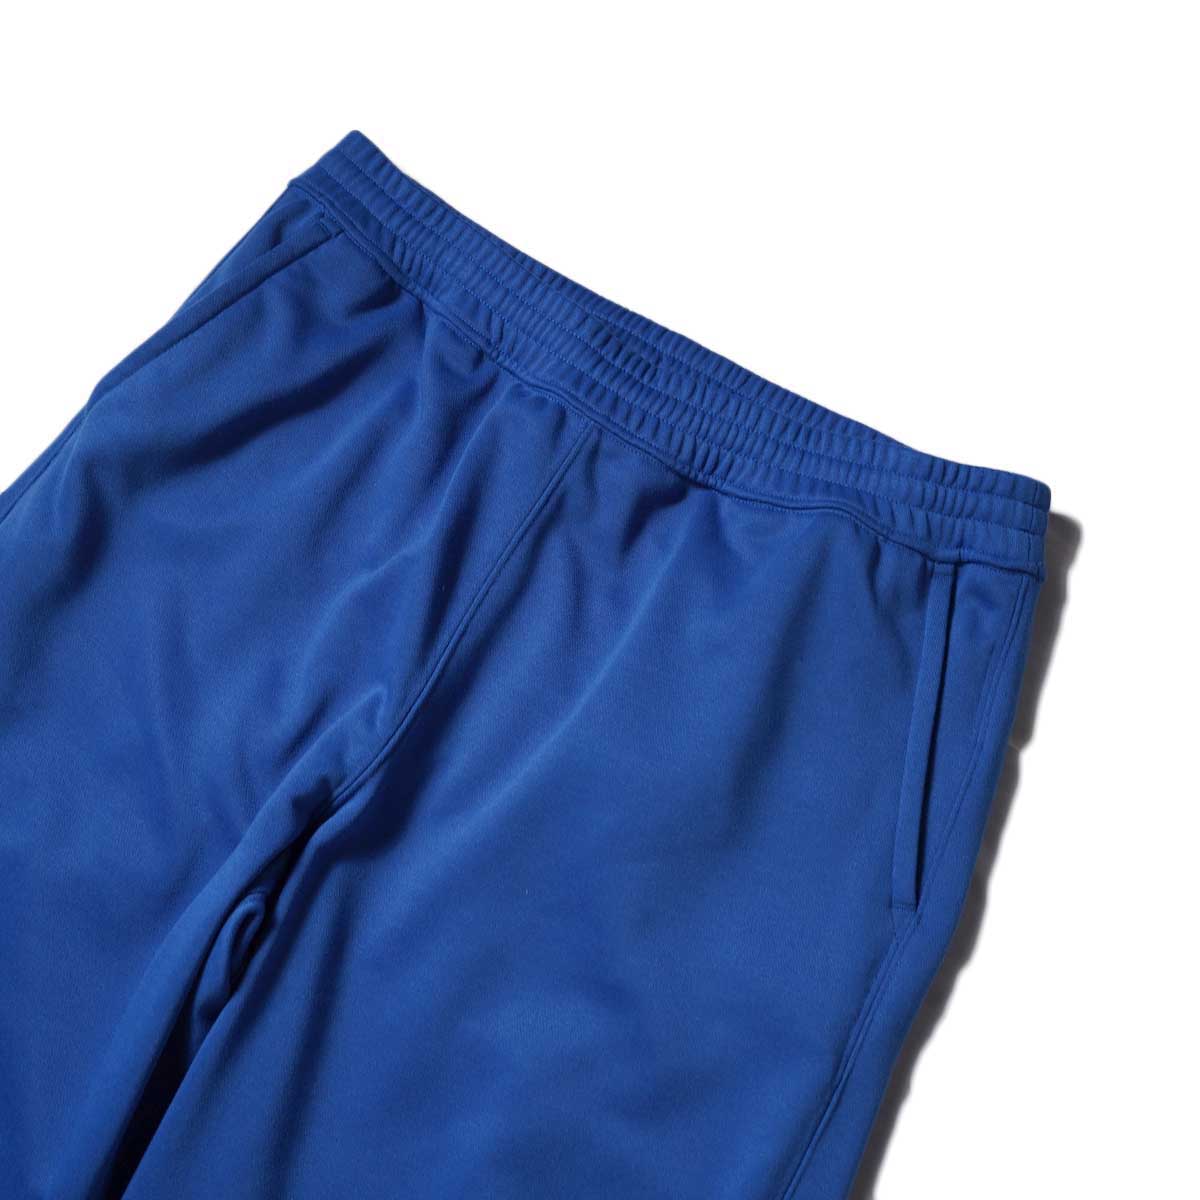 DAIWA PIER39 / TECH SWEAT PANTS BASIC (Royal Blue)ウエスト